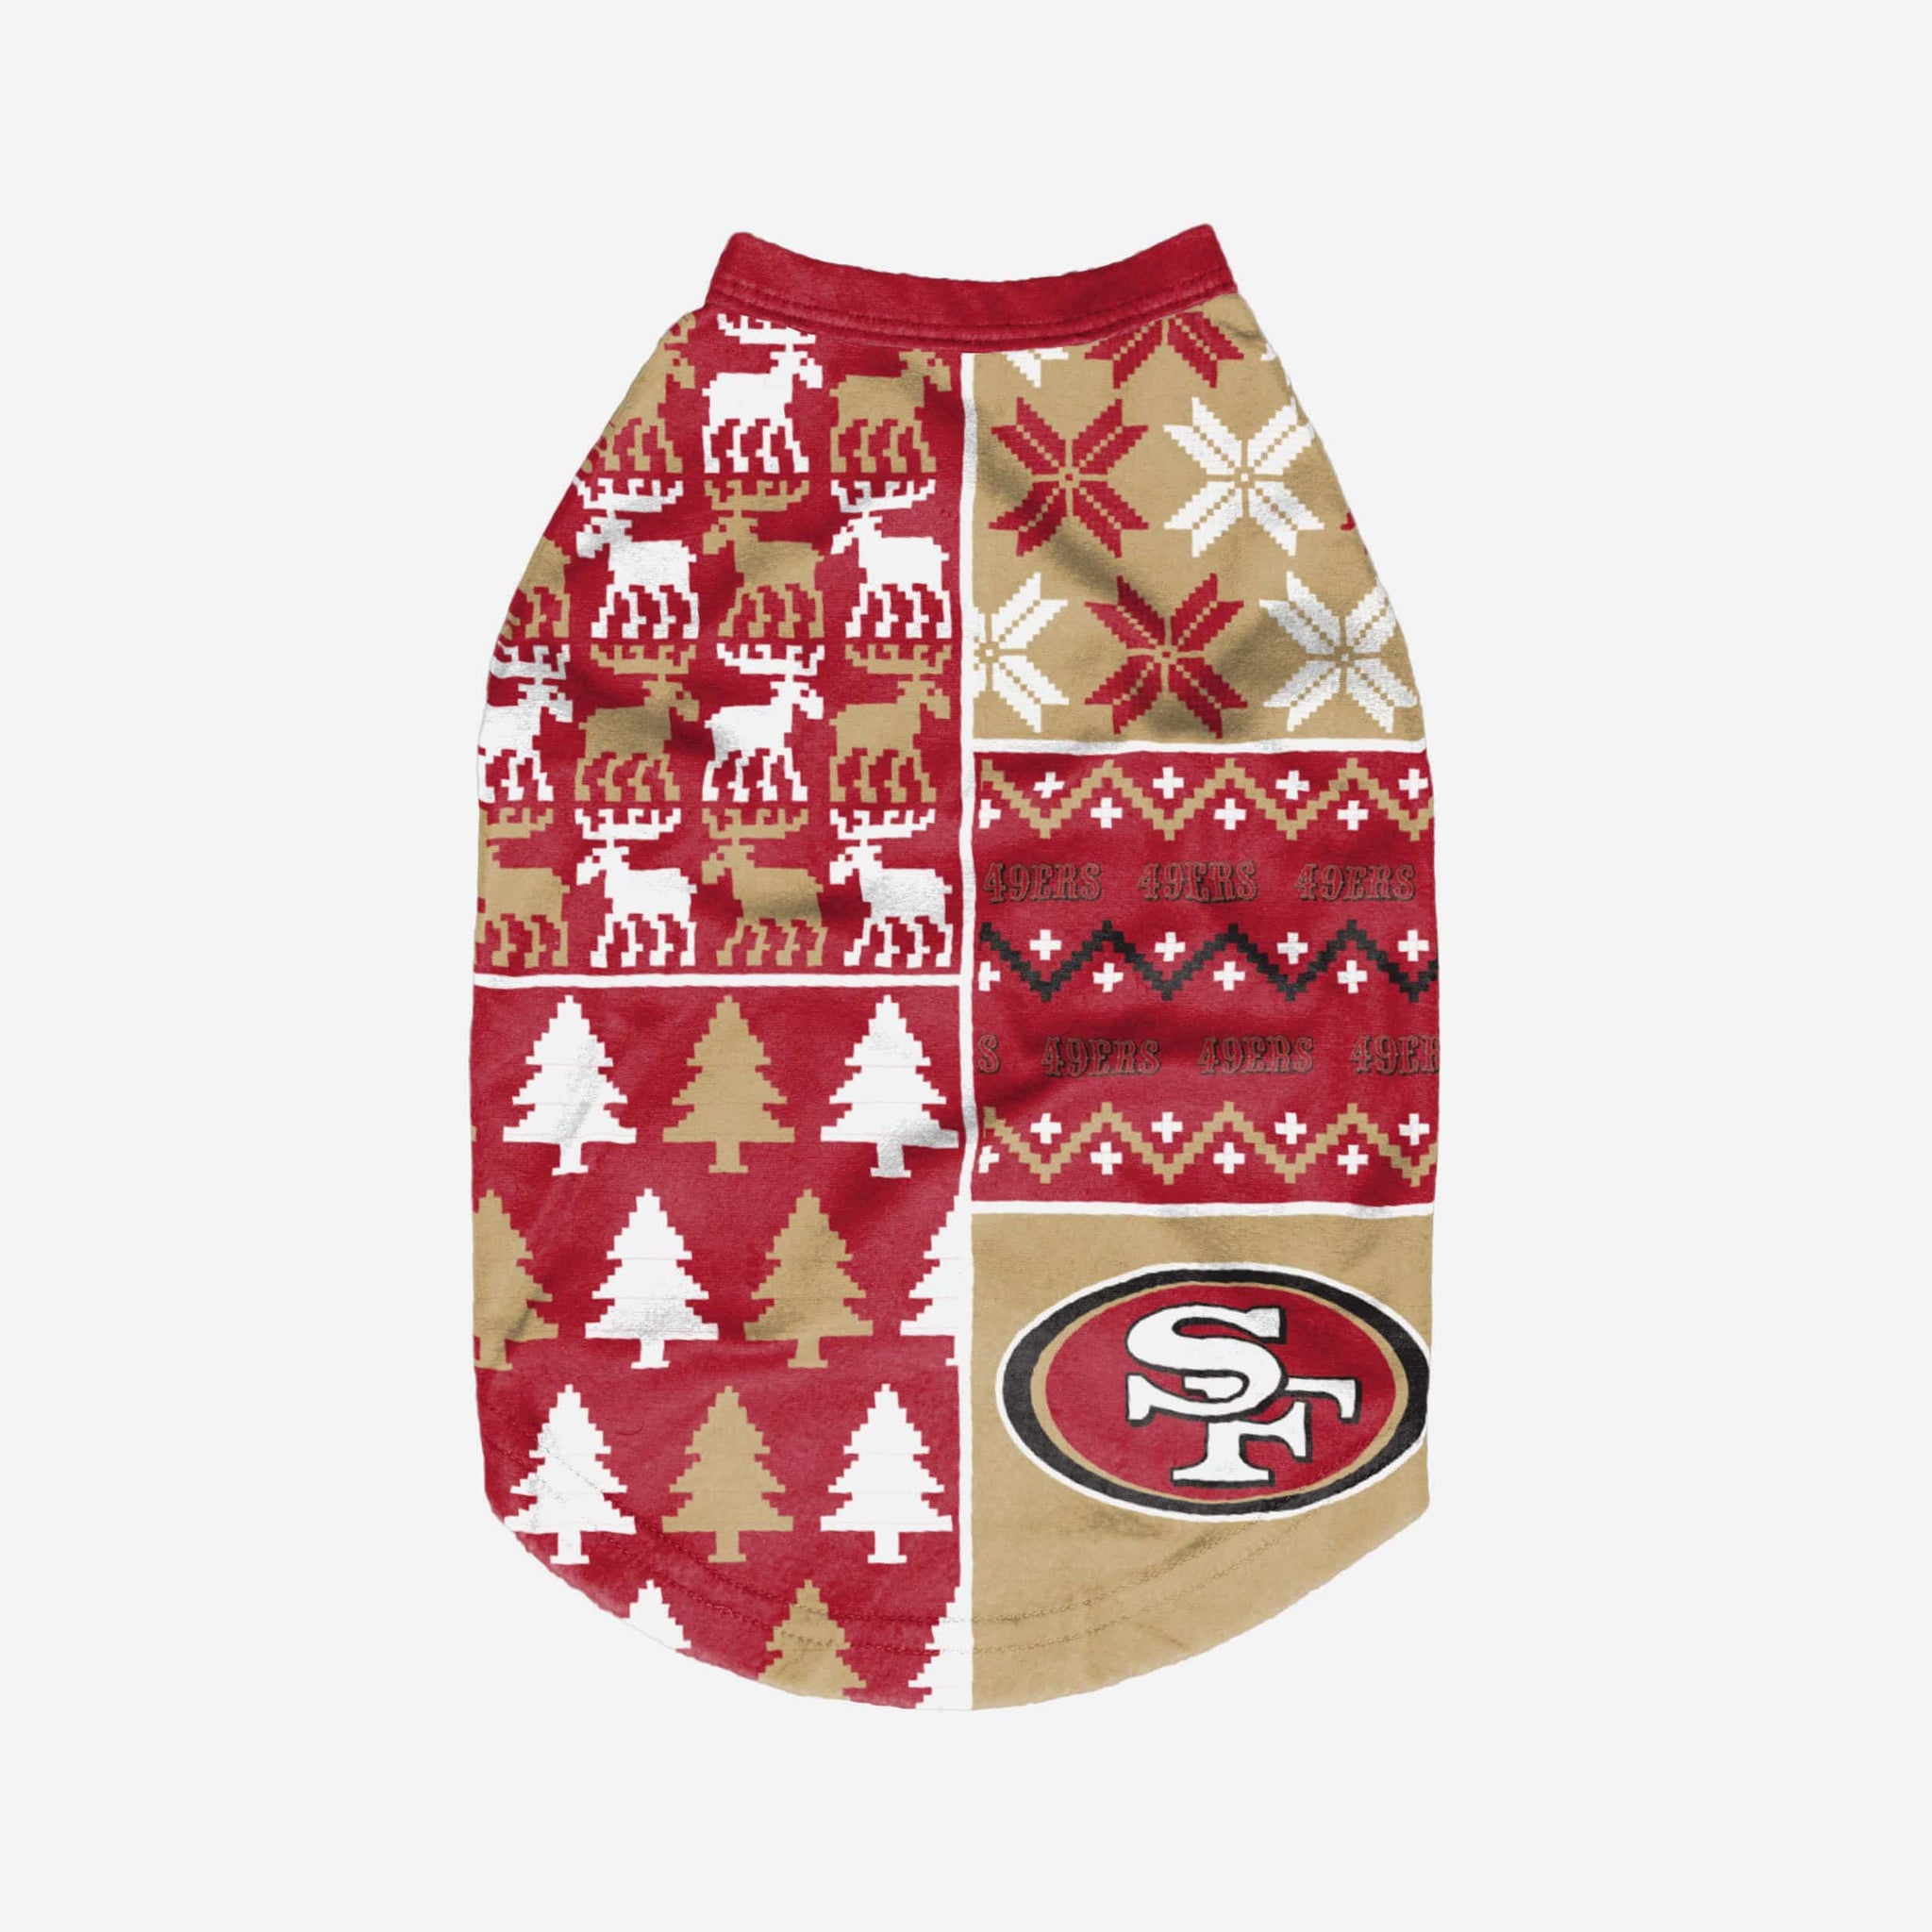 49ers dog sweater